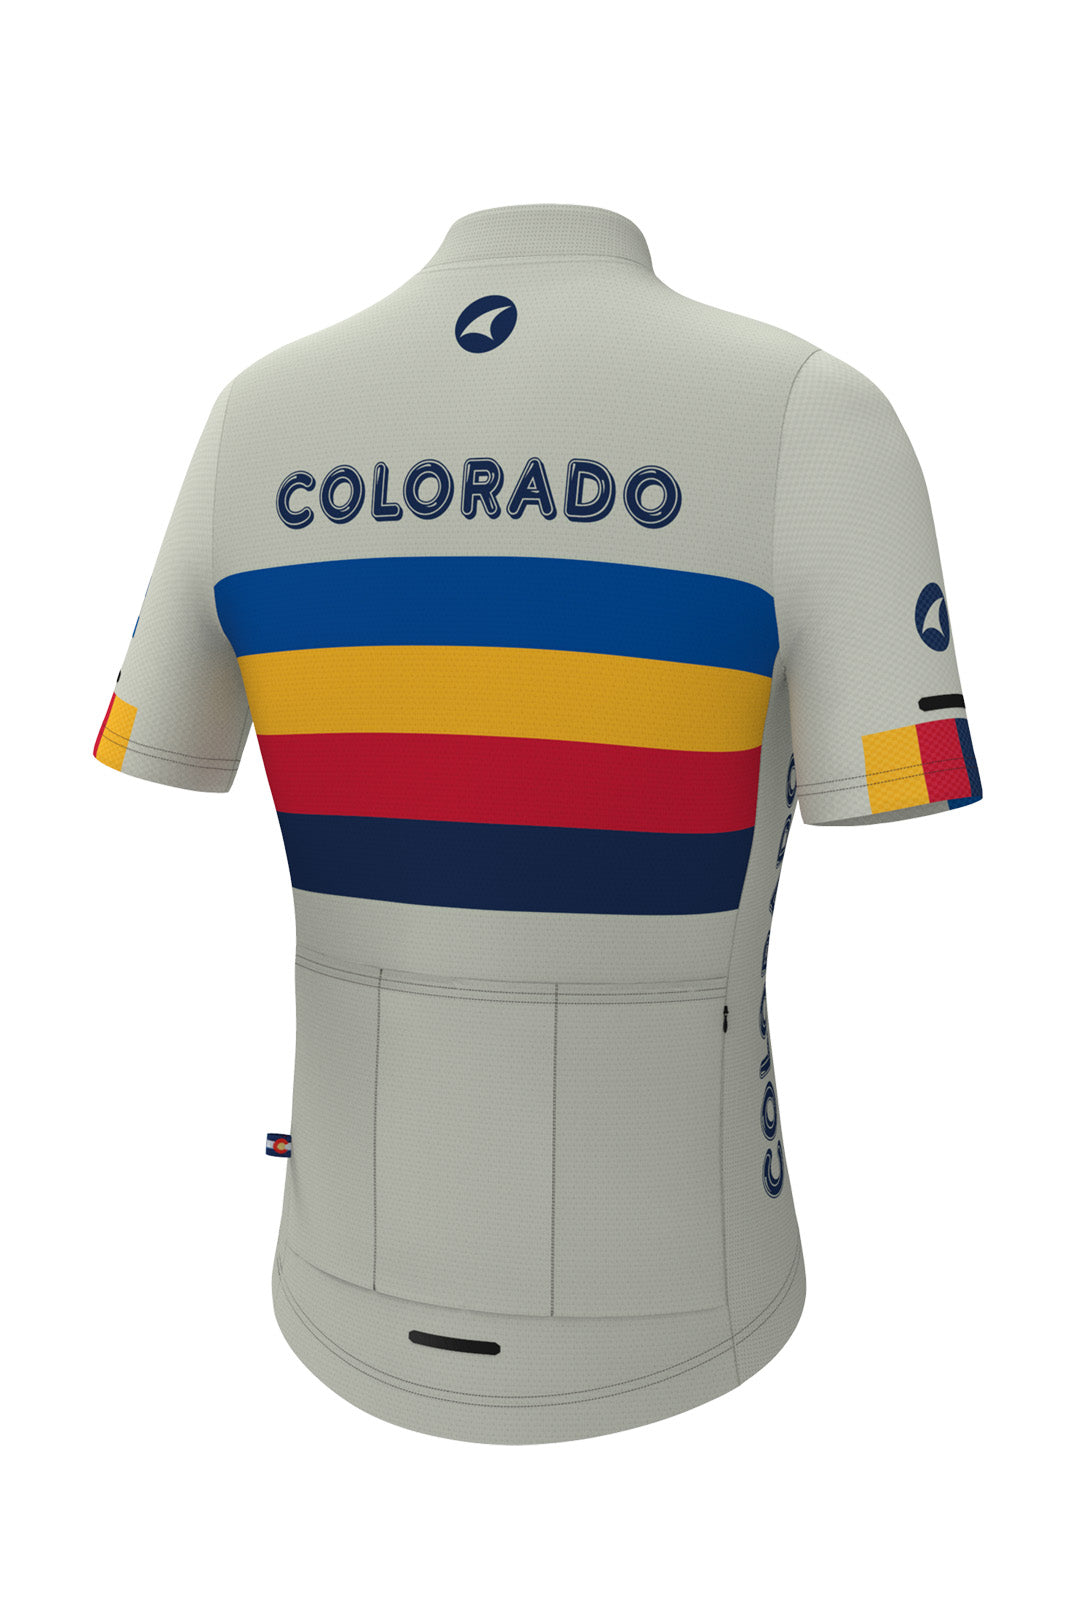 Women's White Retro Colorado Cycling Jersey - Ascent Back View